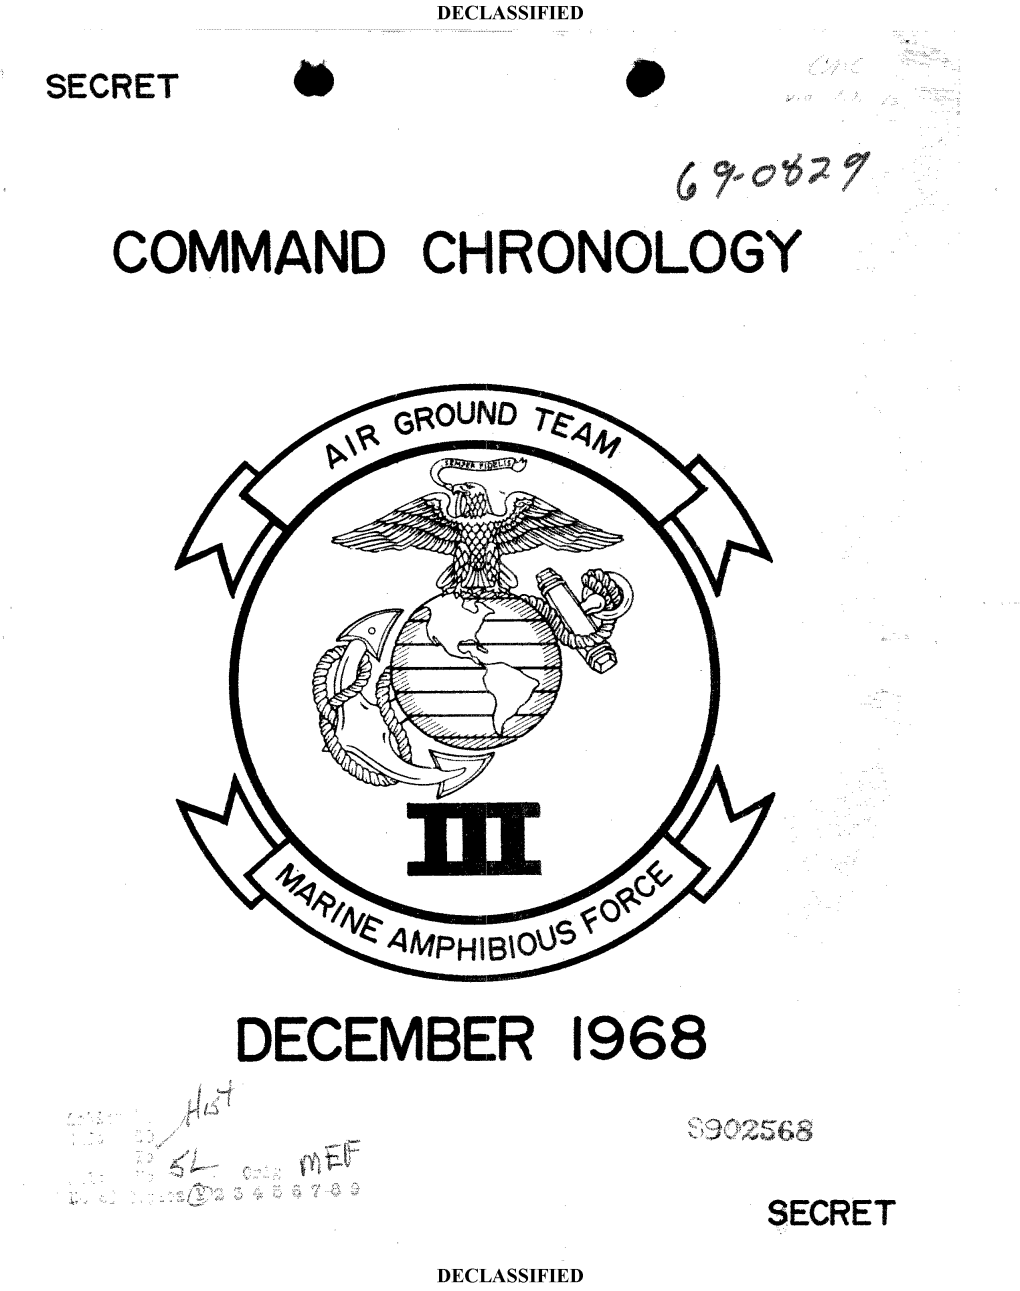 Command Chronology